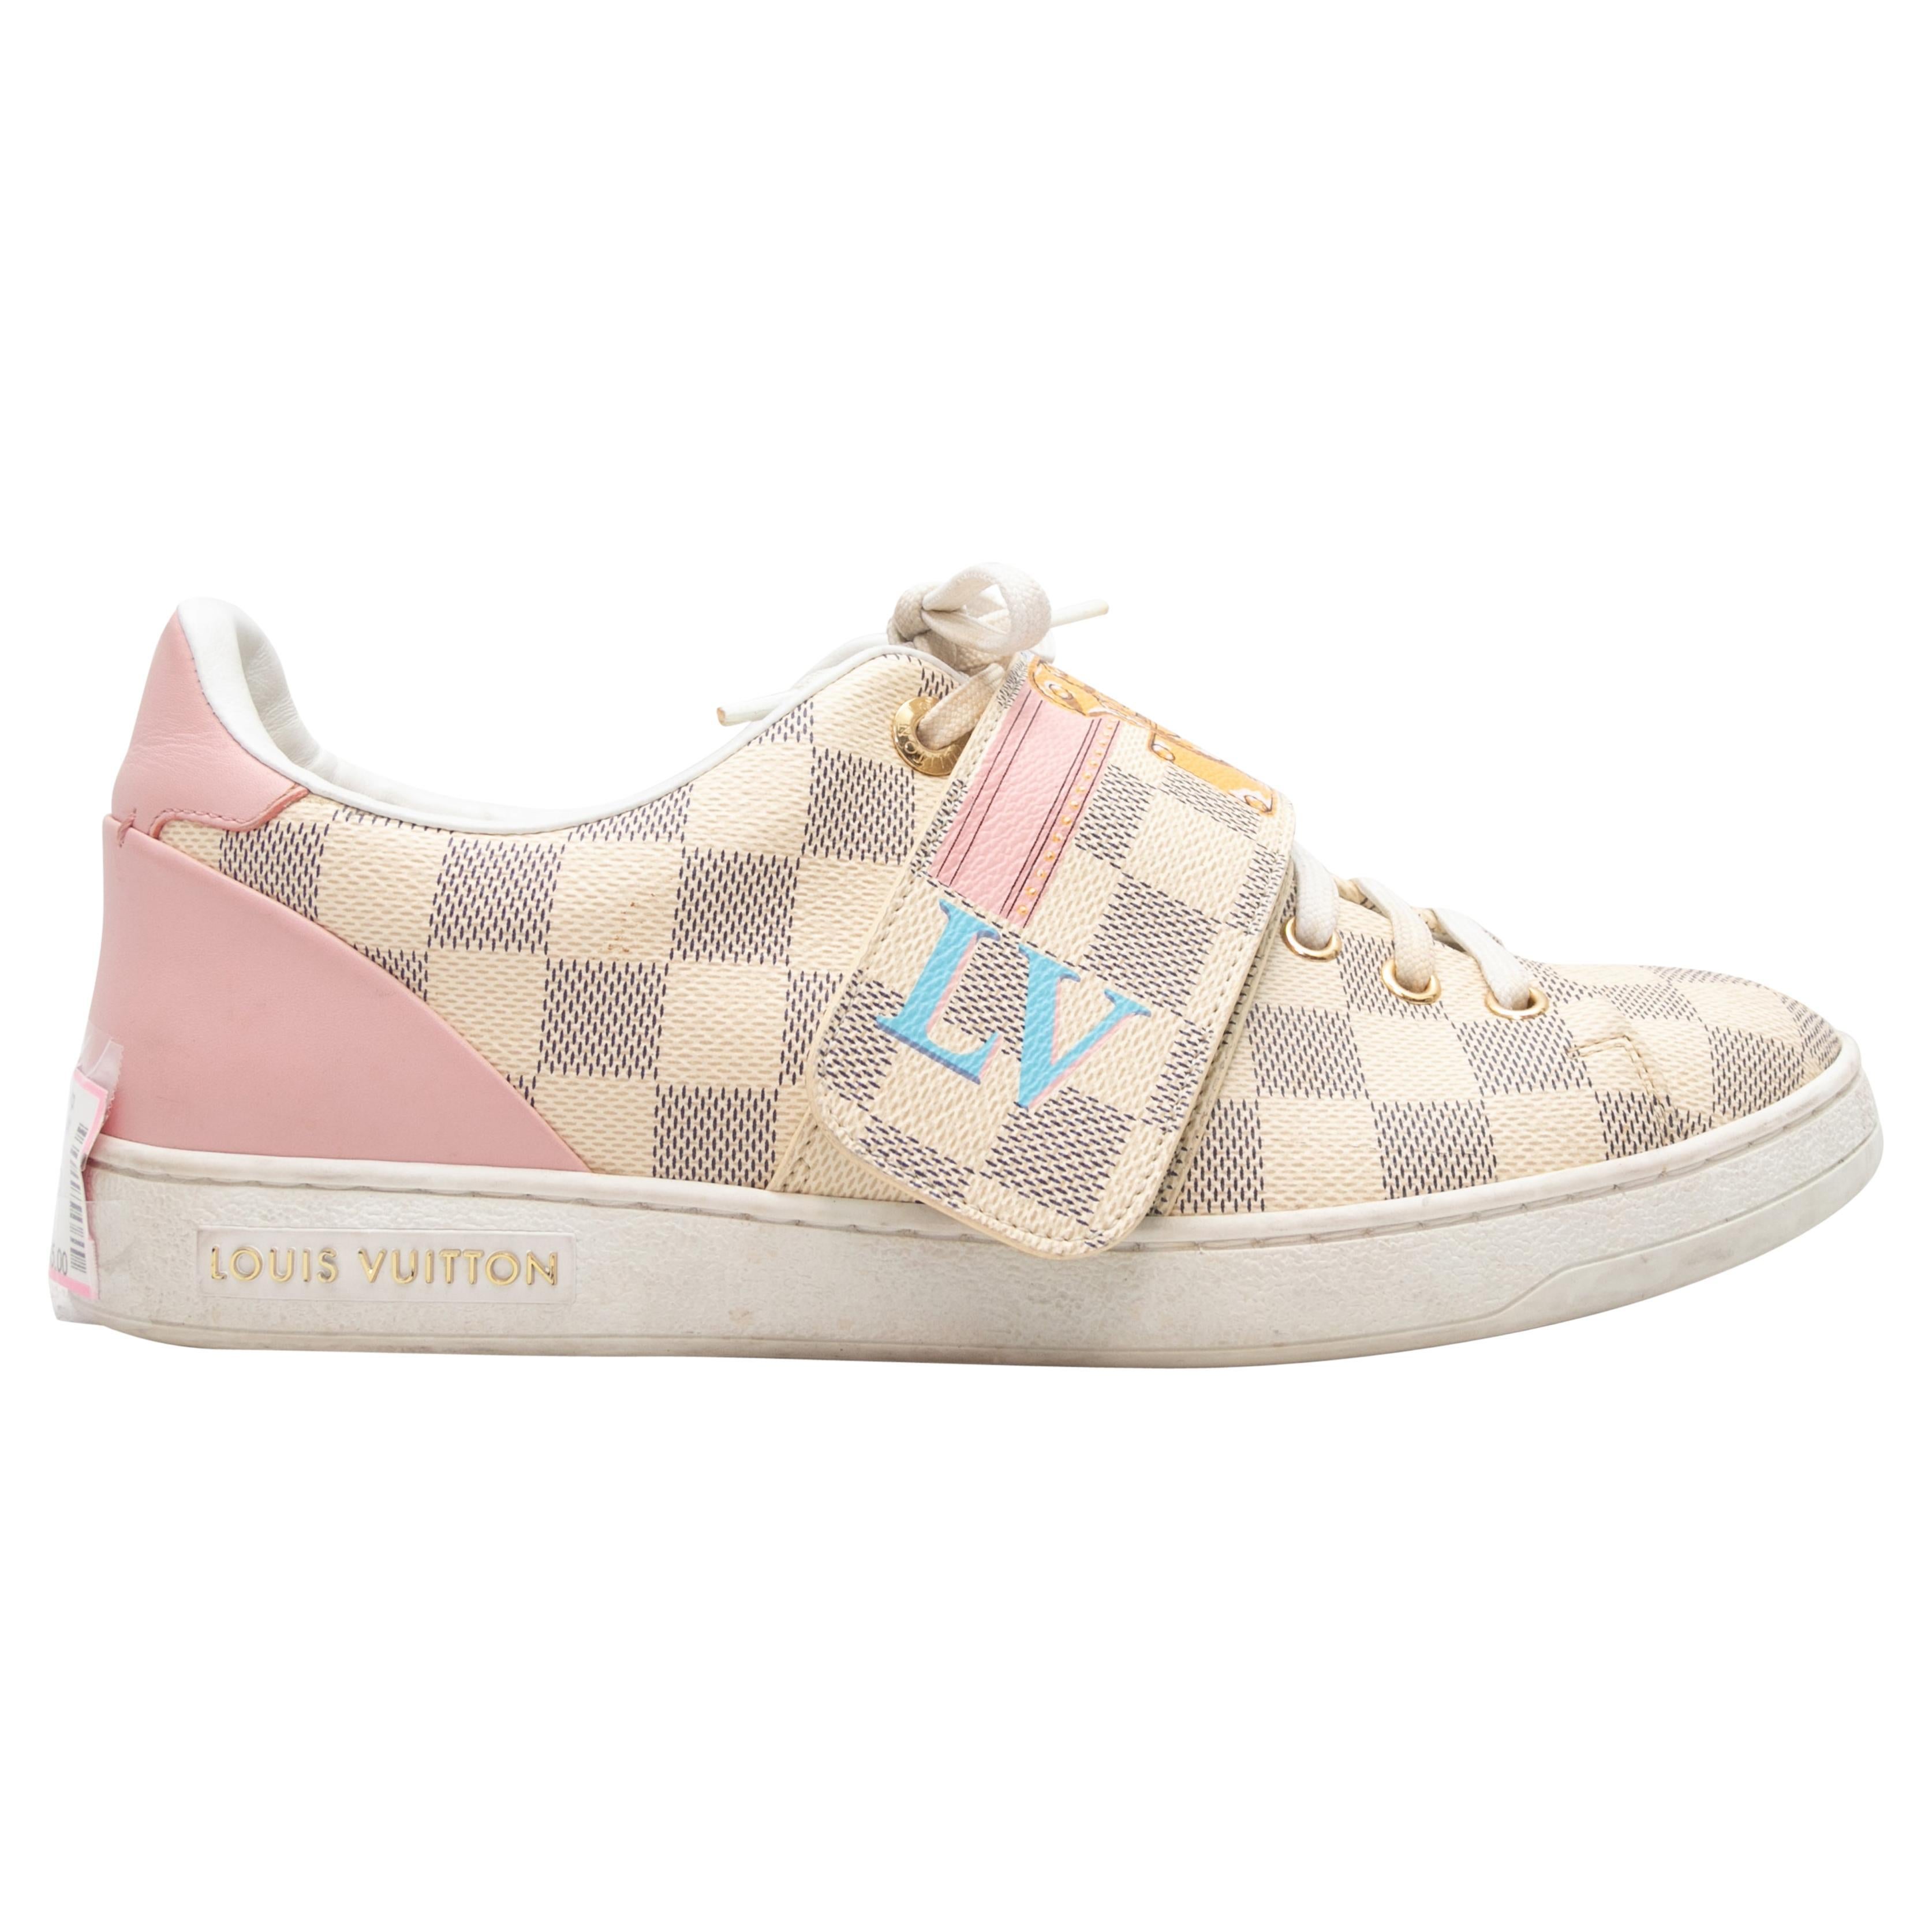 Cream & Multicolor Louis Vuitton Damier Azur Luggage Motif Sneakers Size 39